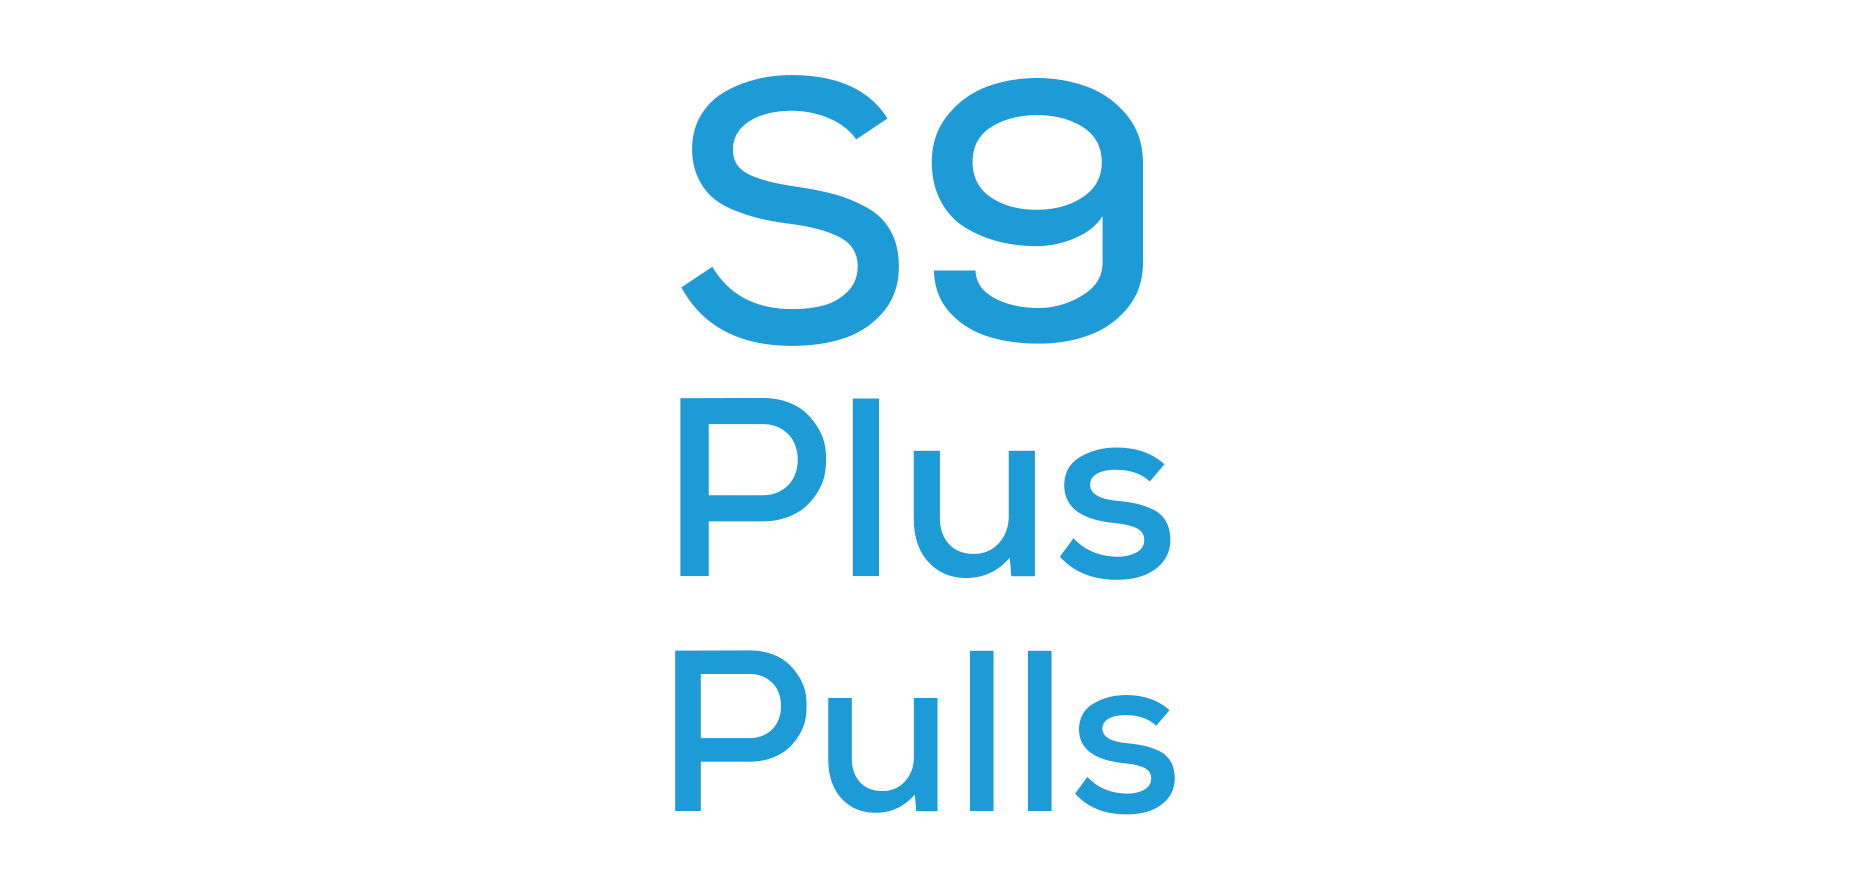 Galaxy S9 Plus Pulls